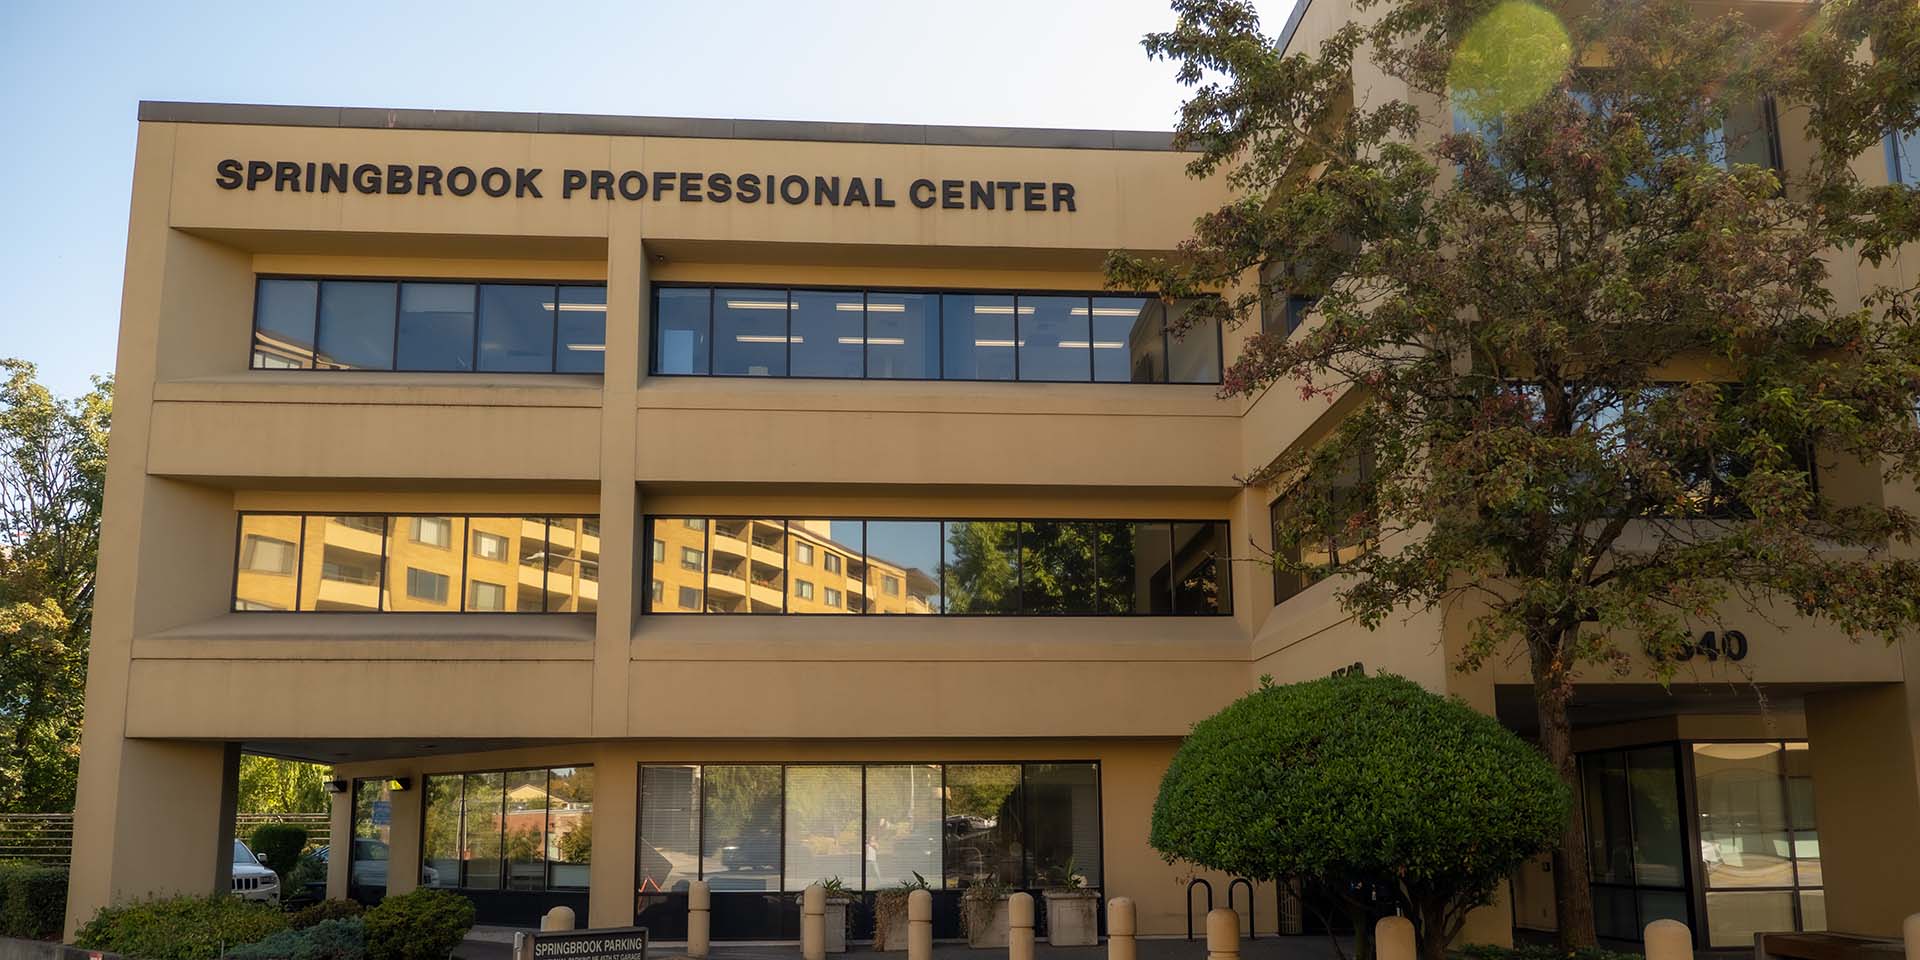 An exterior view of Springbrook Professional Center